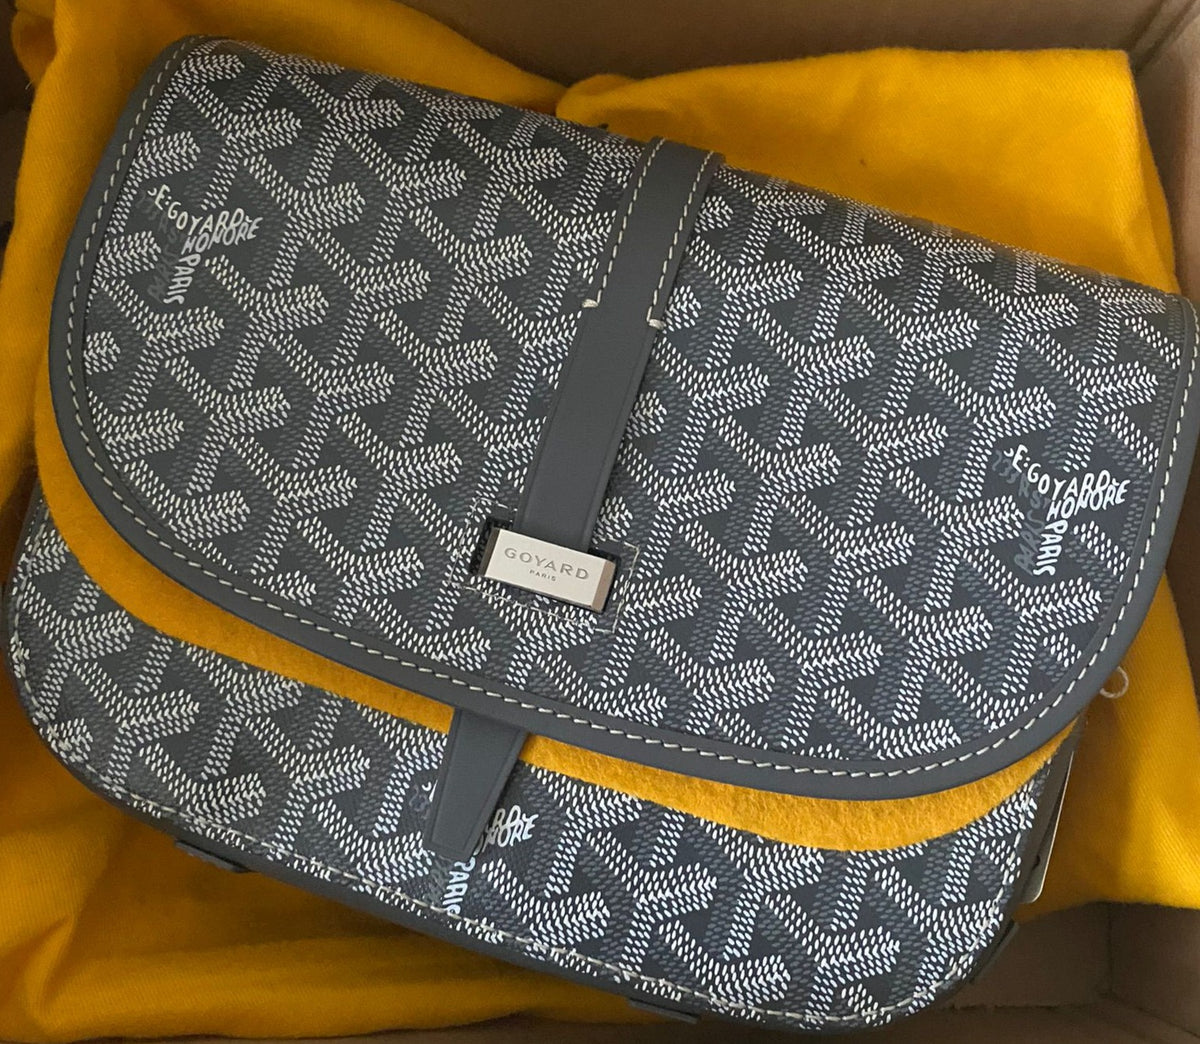 The Goyard Belvedere Bag